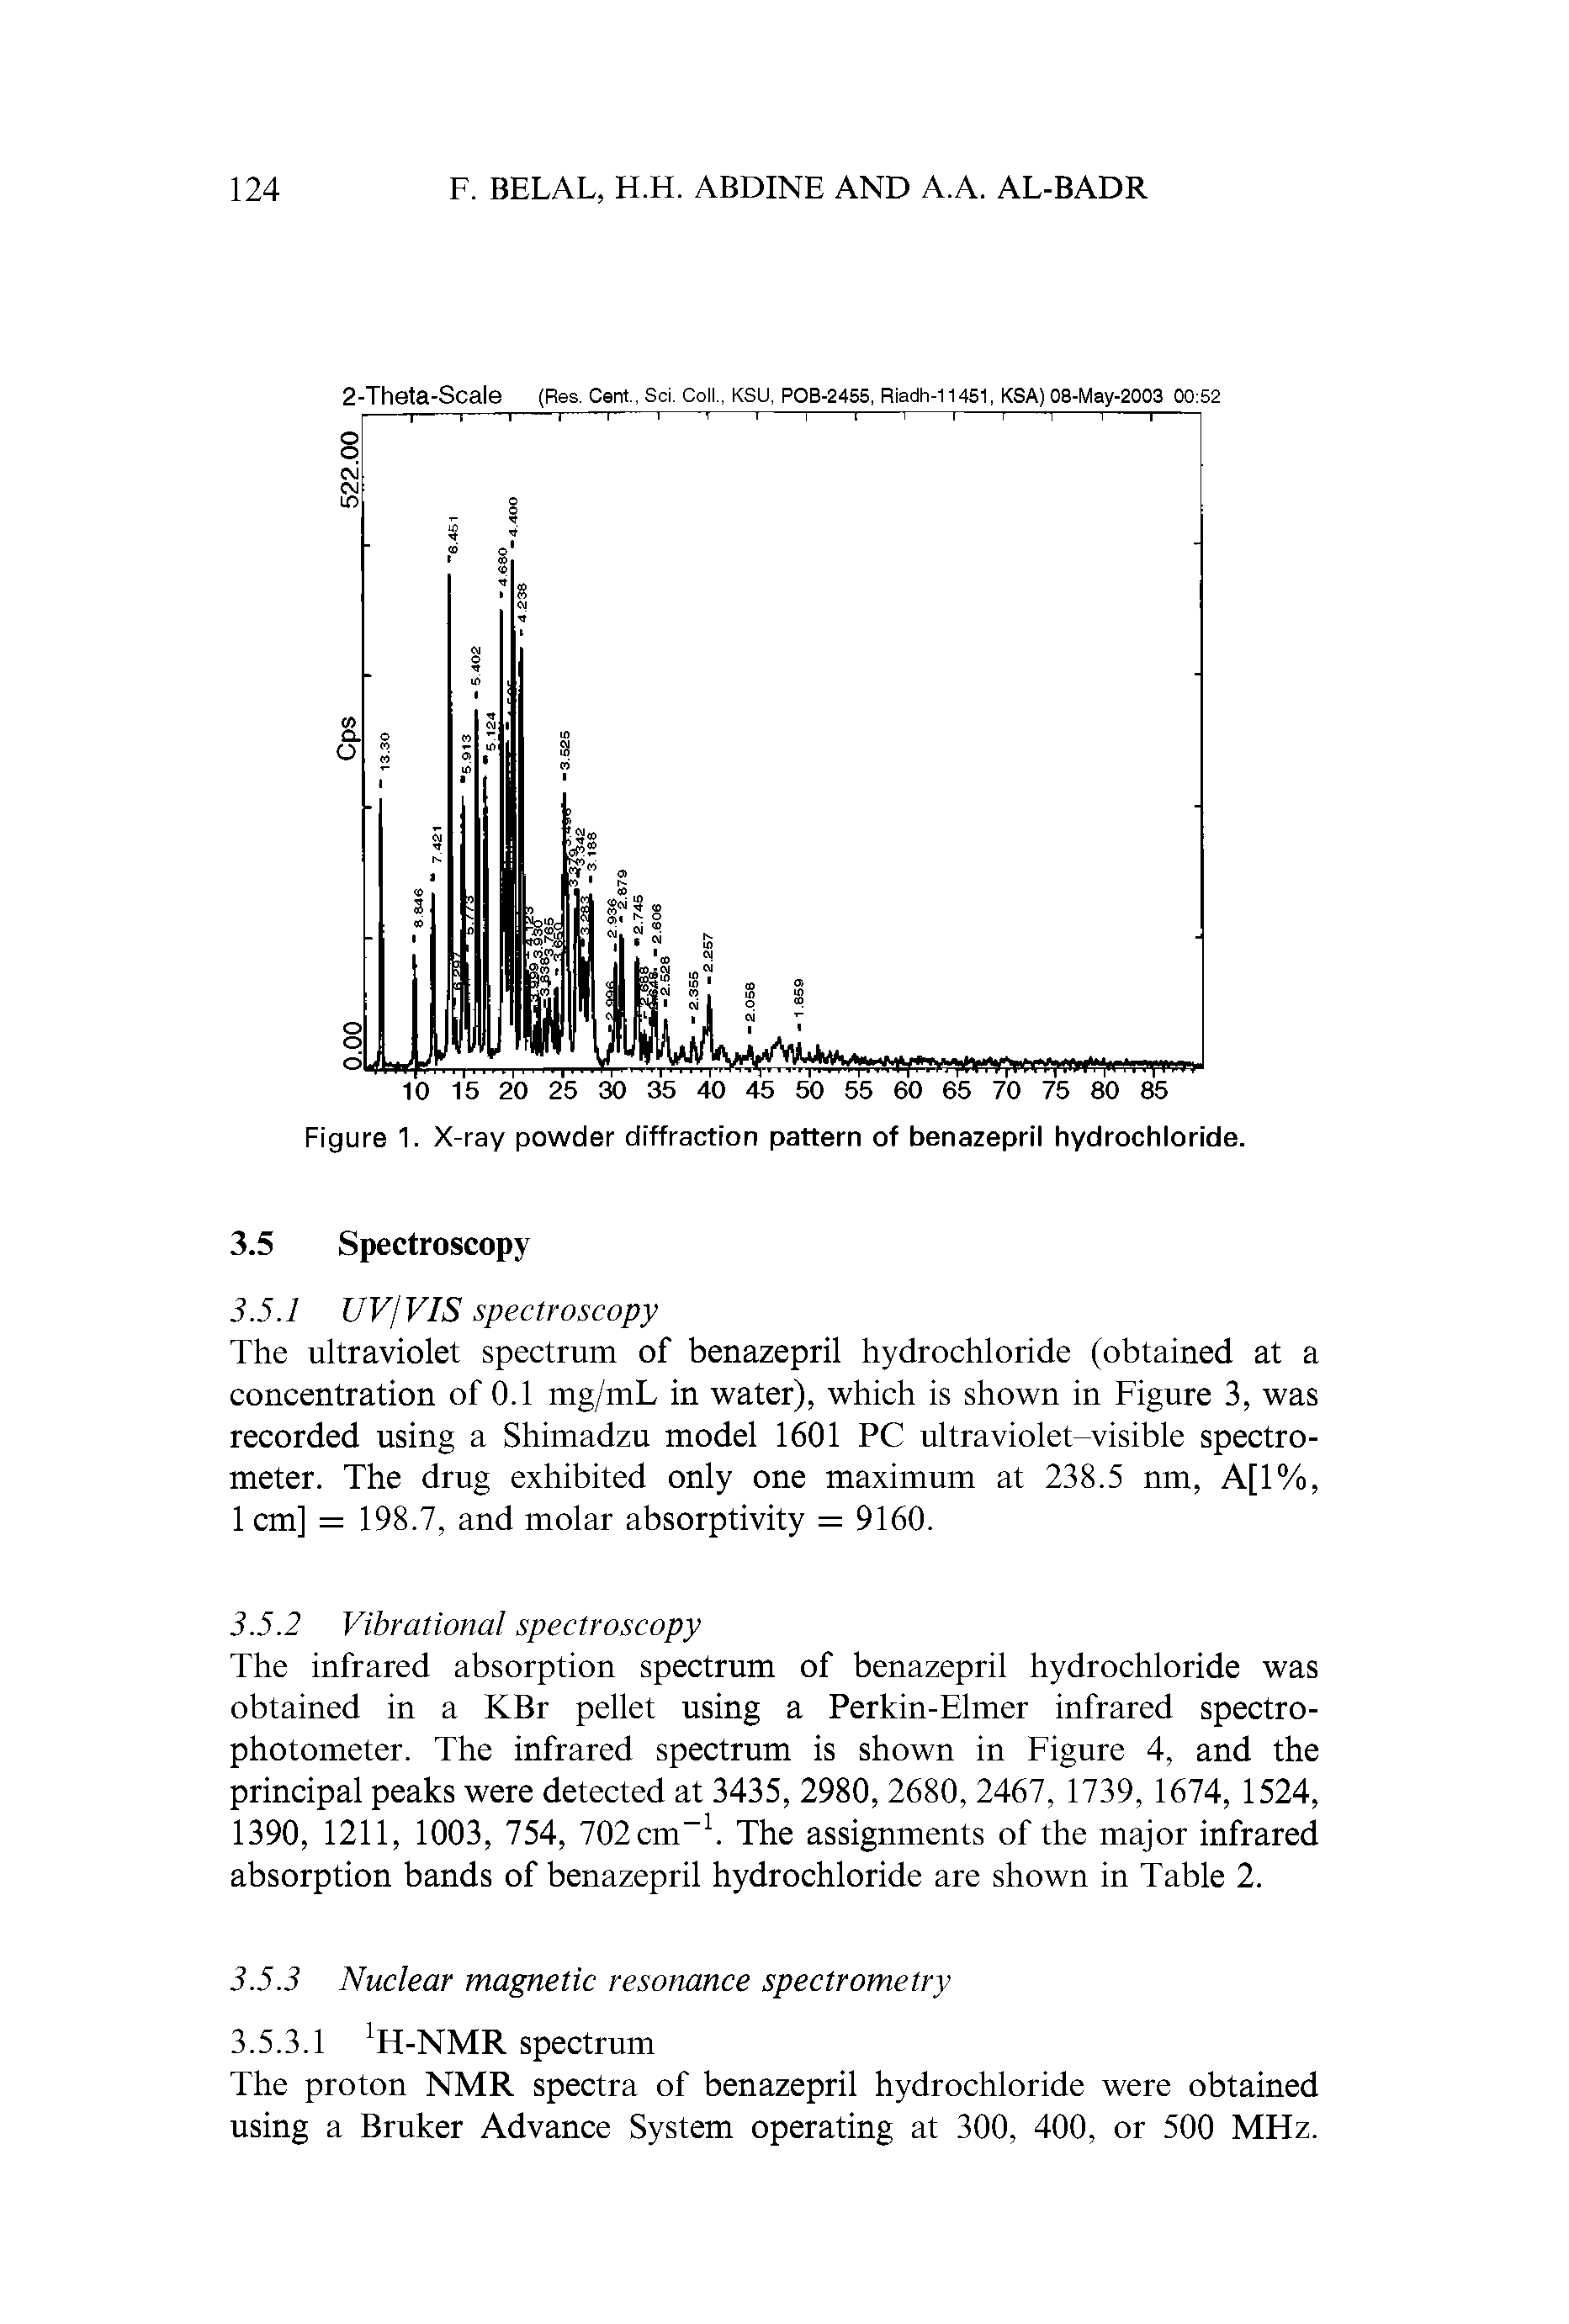 Figure 1. X-ray powder diffraction pattern of benazepril hydrochloride.